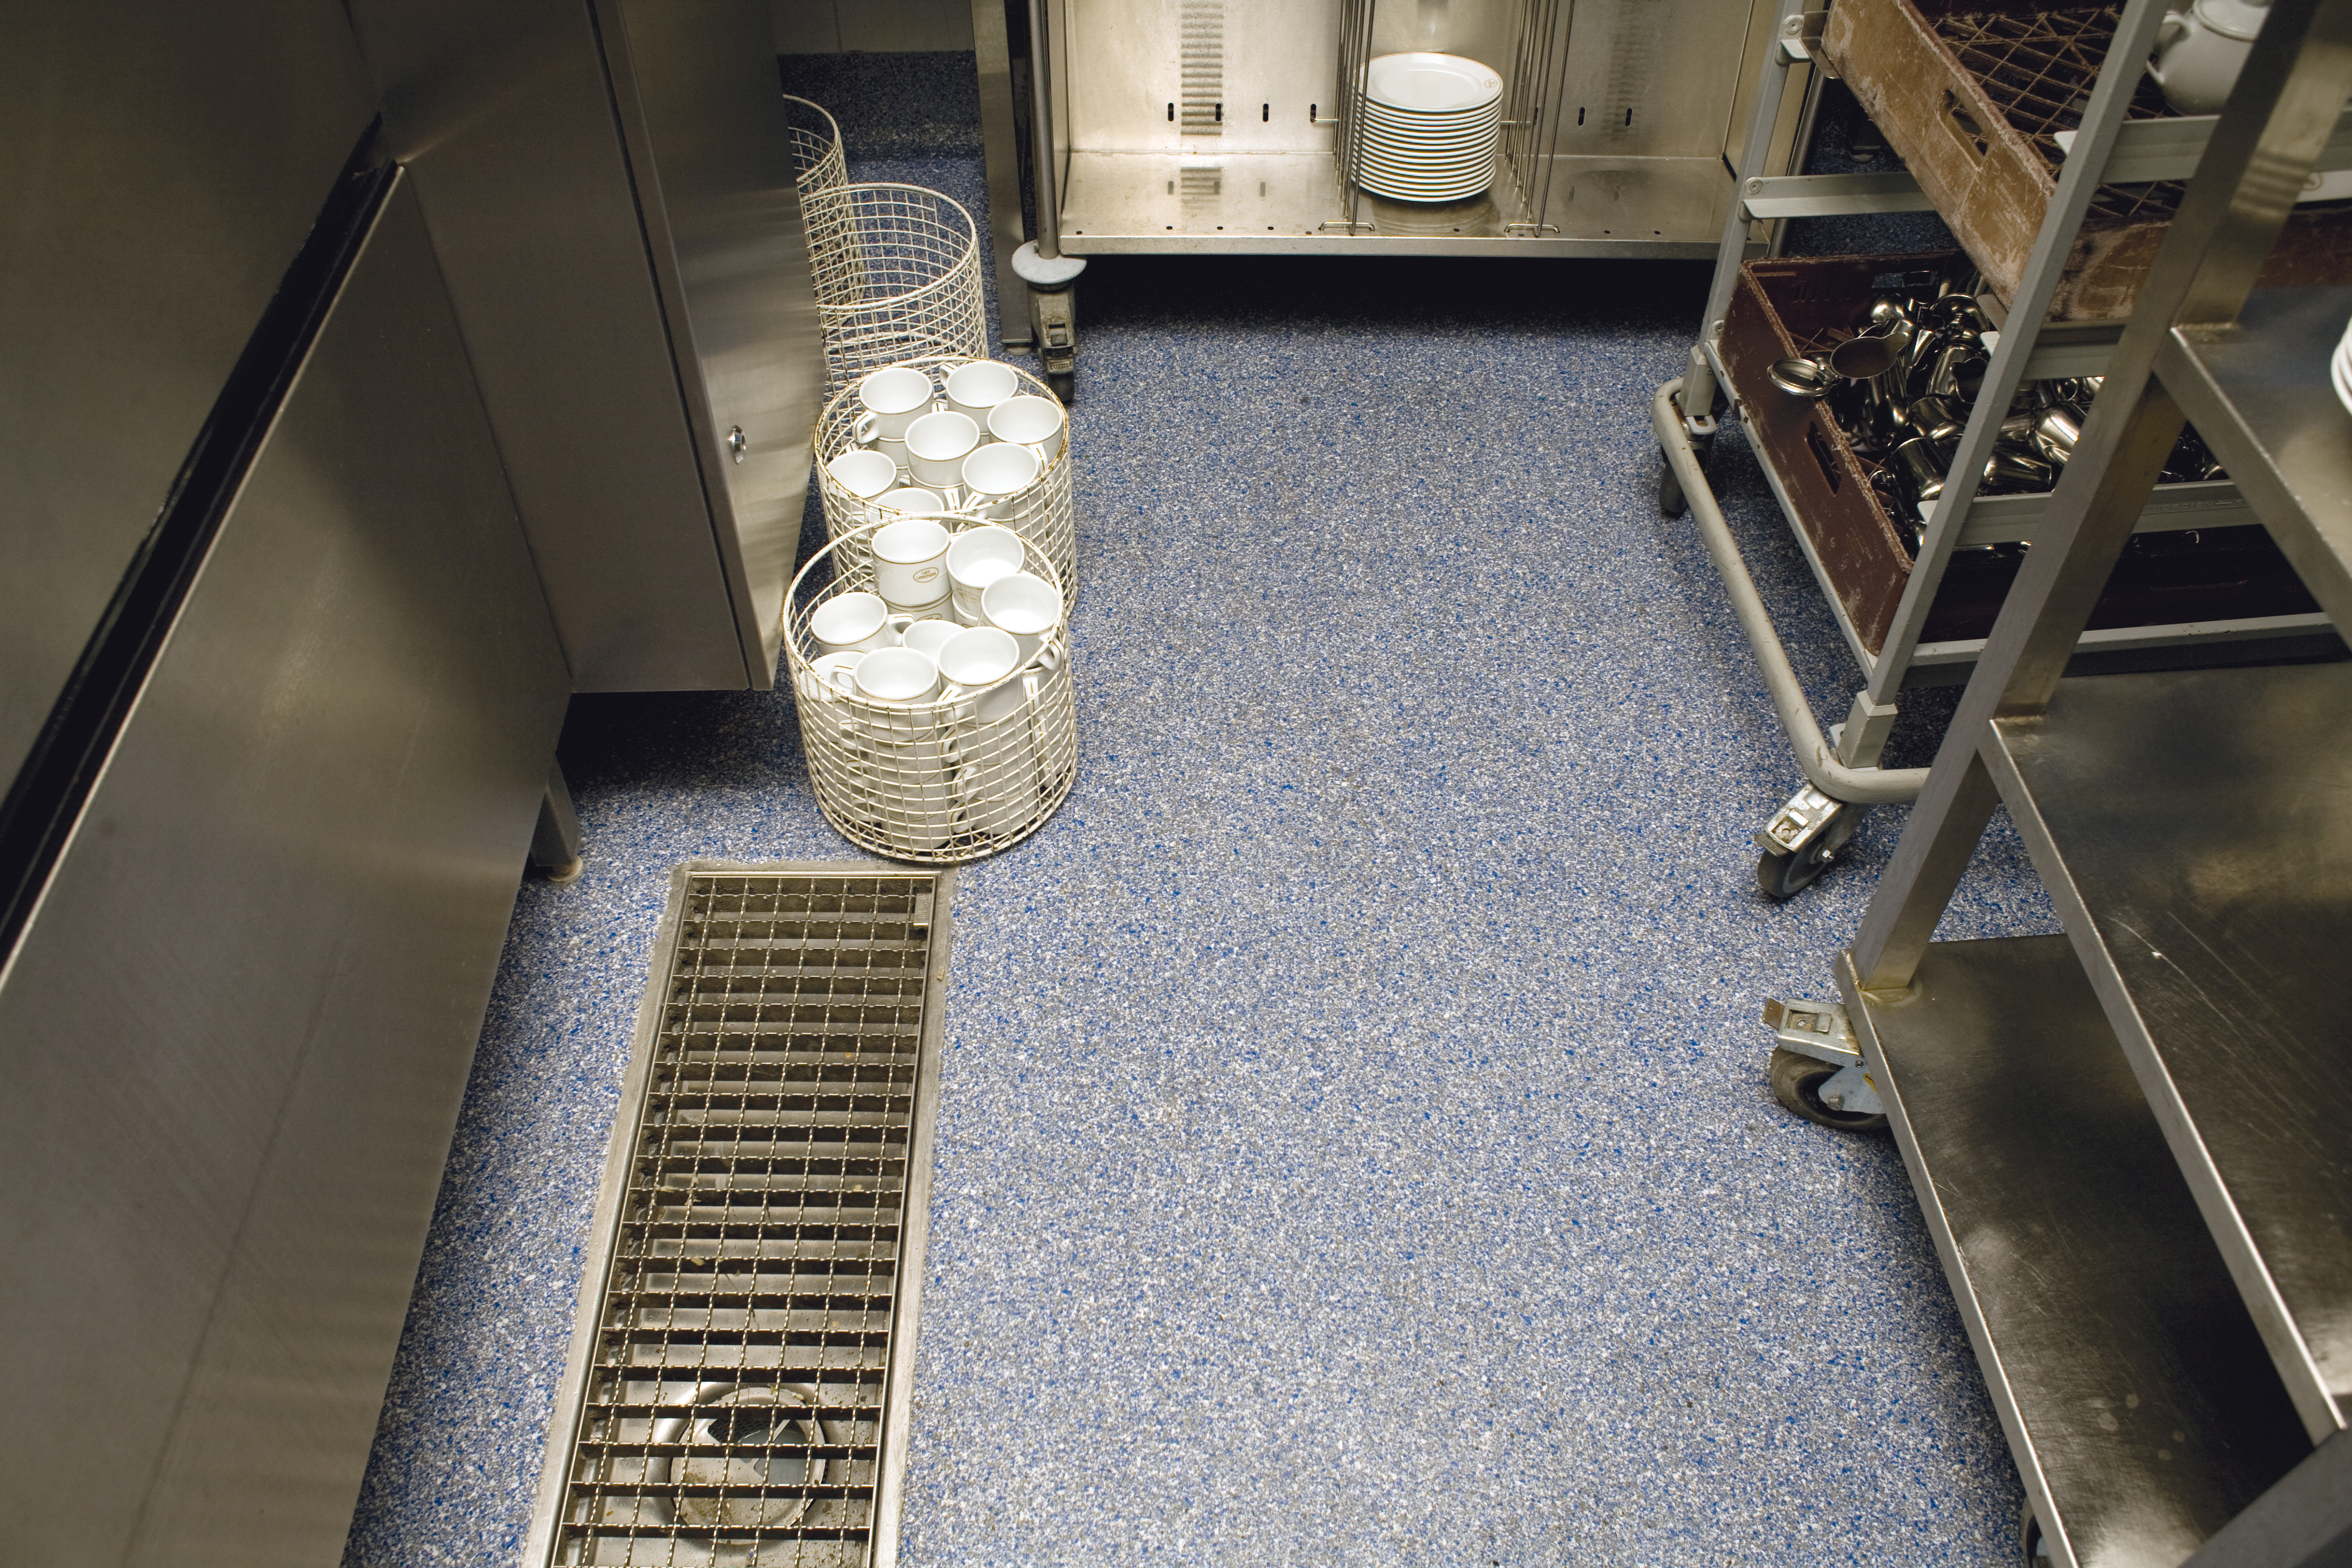 Commercial Kitchen Flooring Best, Best Tiles For Restaurant Kitchen